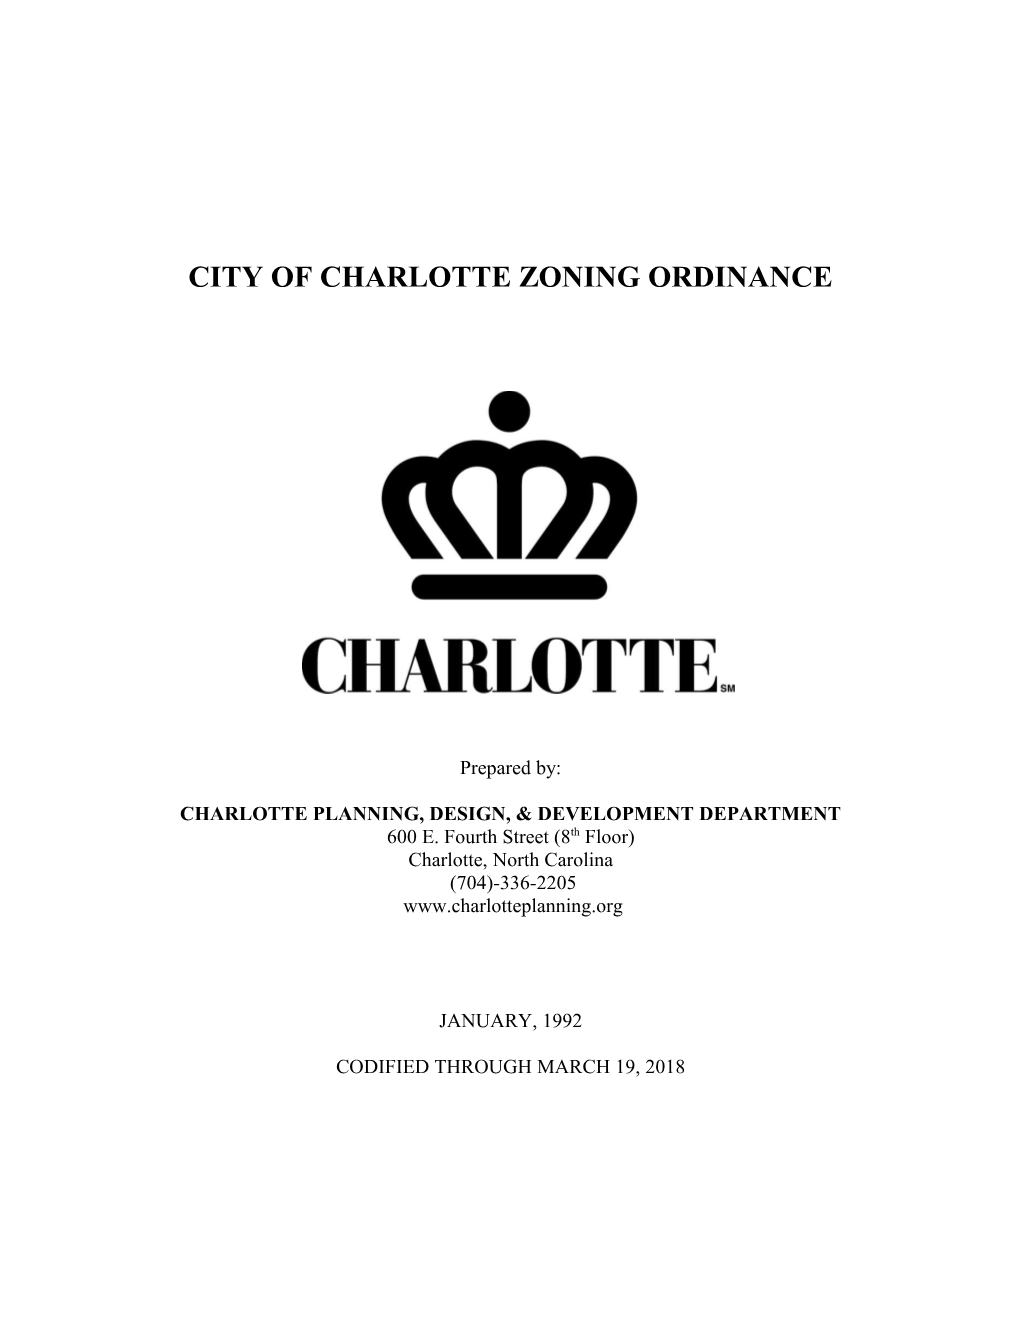 City of Charlotte Zoning Ordinance